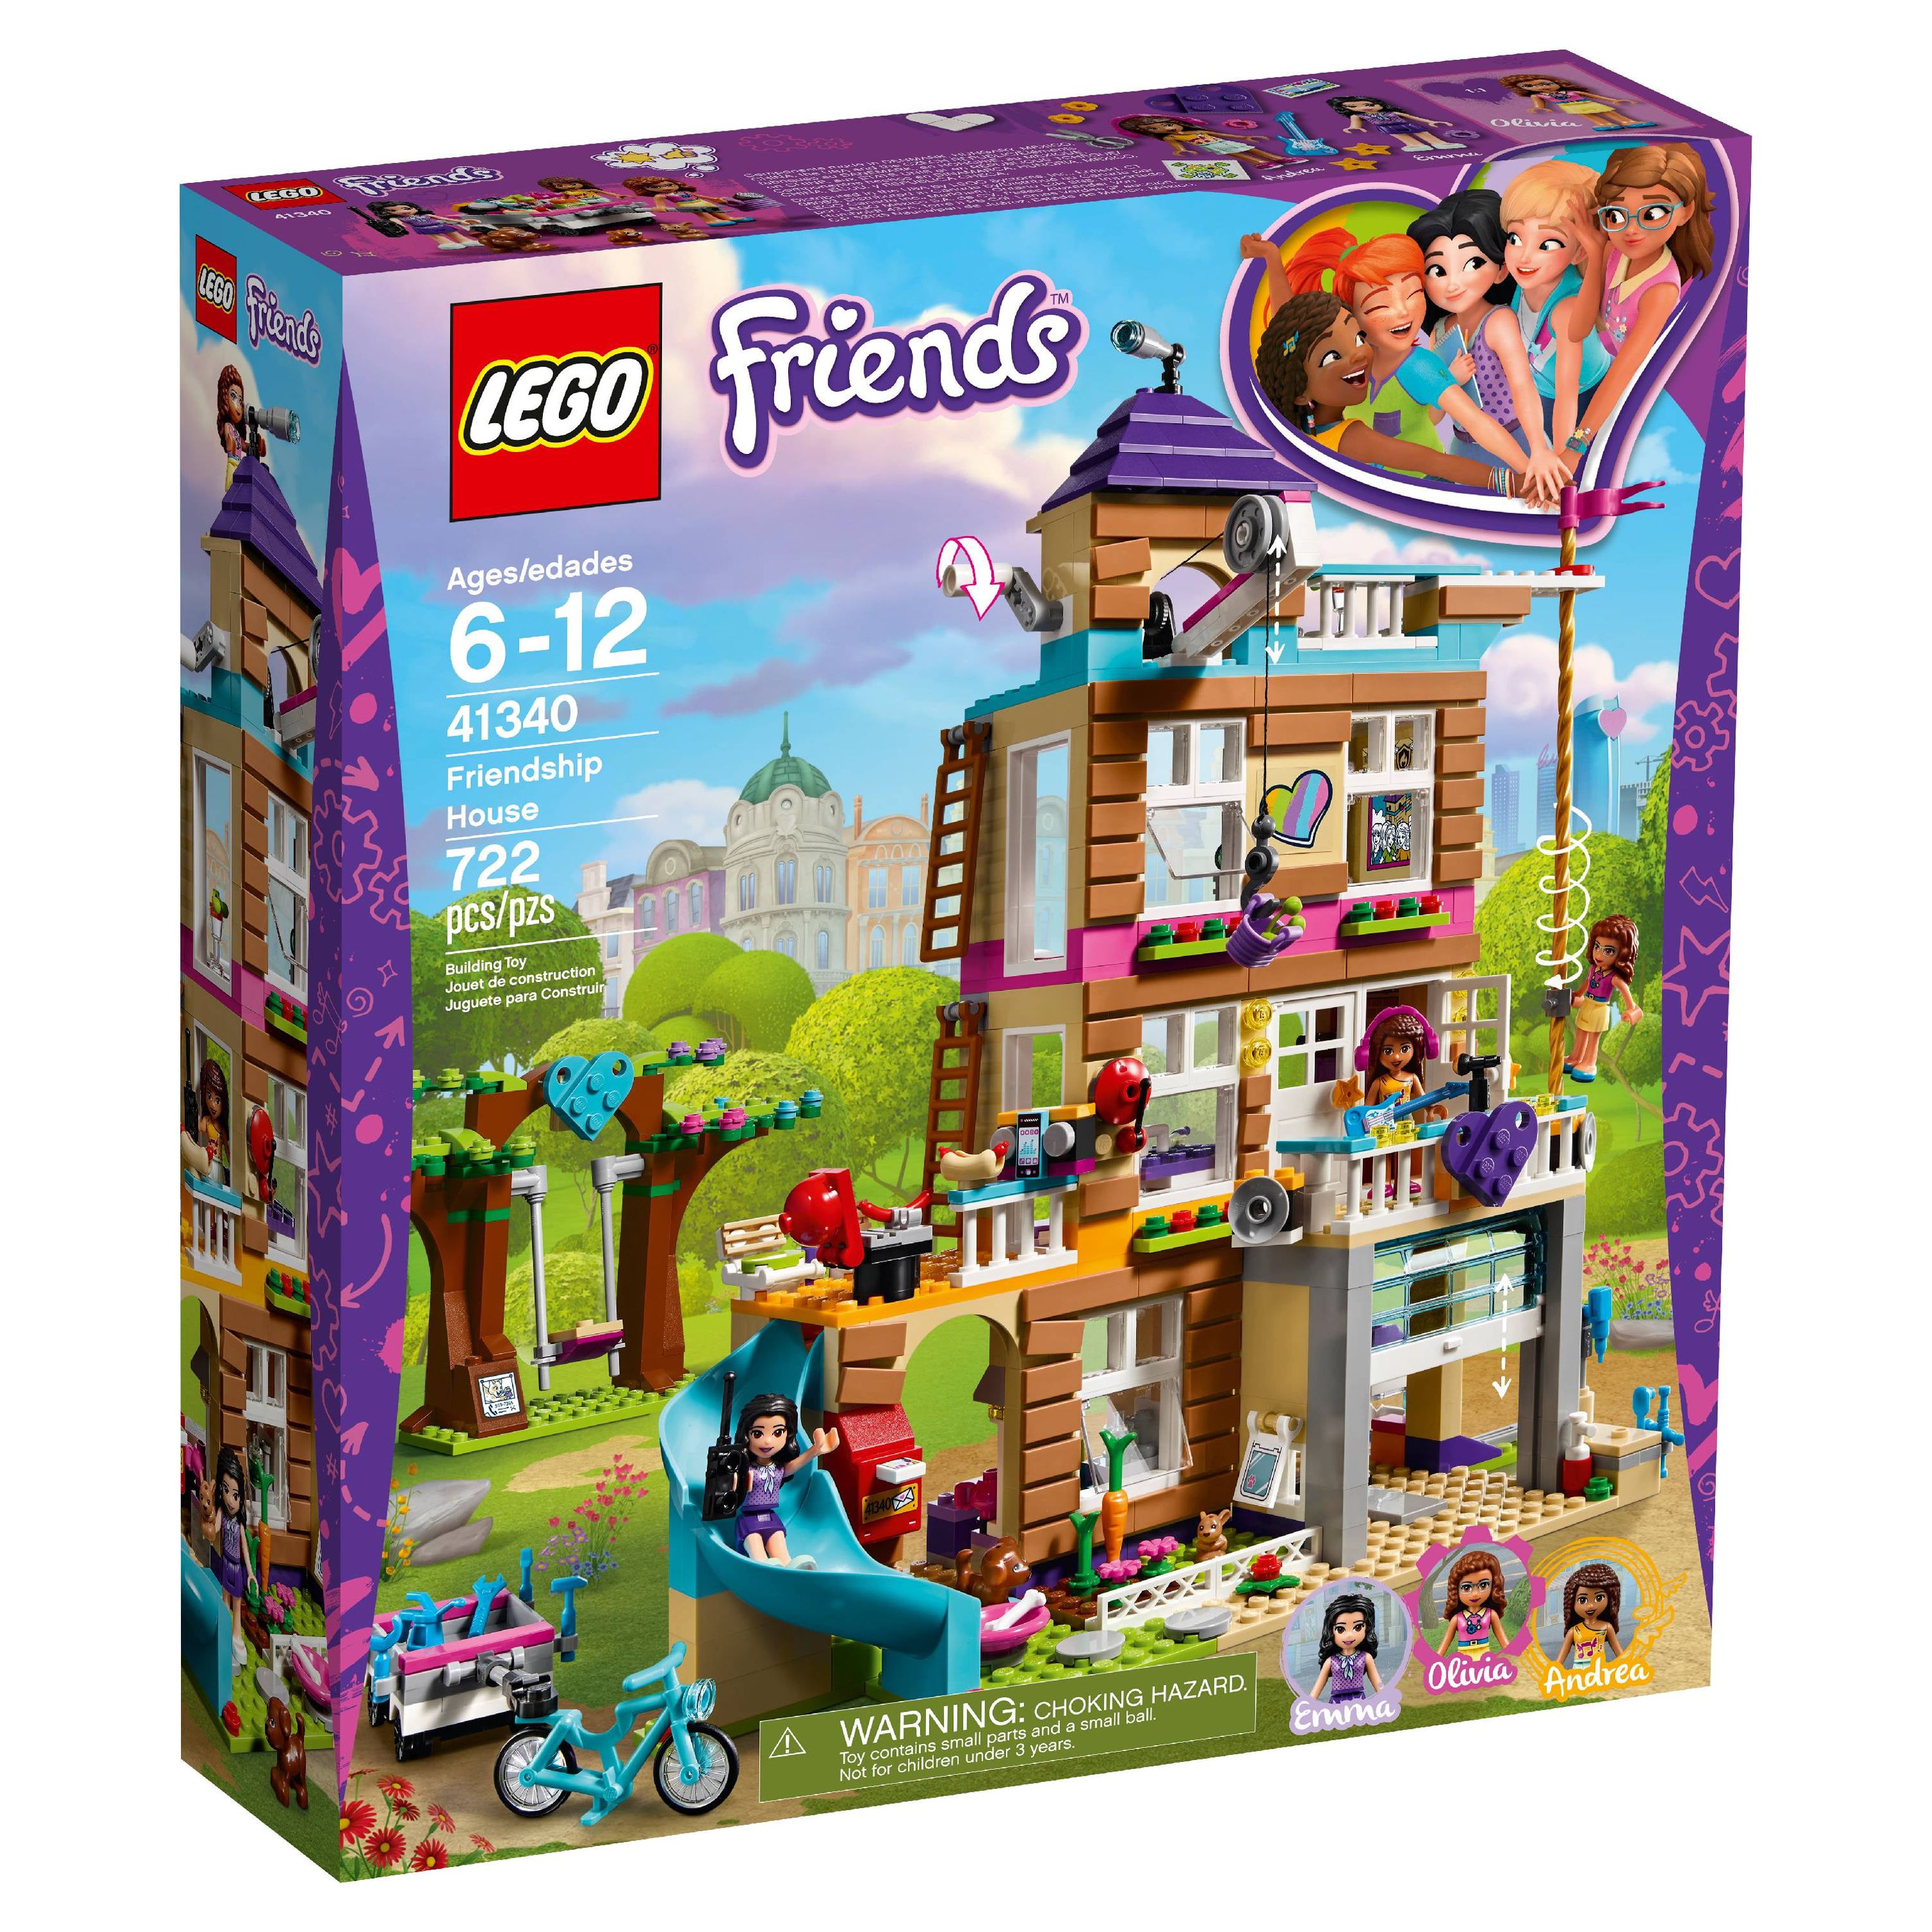 LEGO Friends Friendship House 41340 4-Story Building Set (722 Pieces) - image 5 of 8